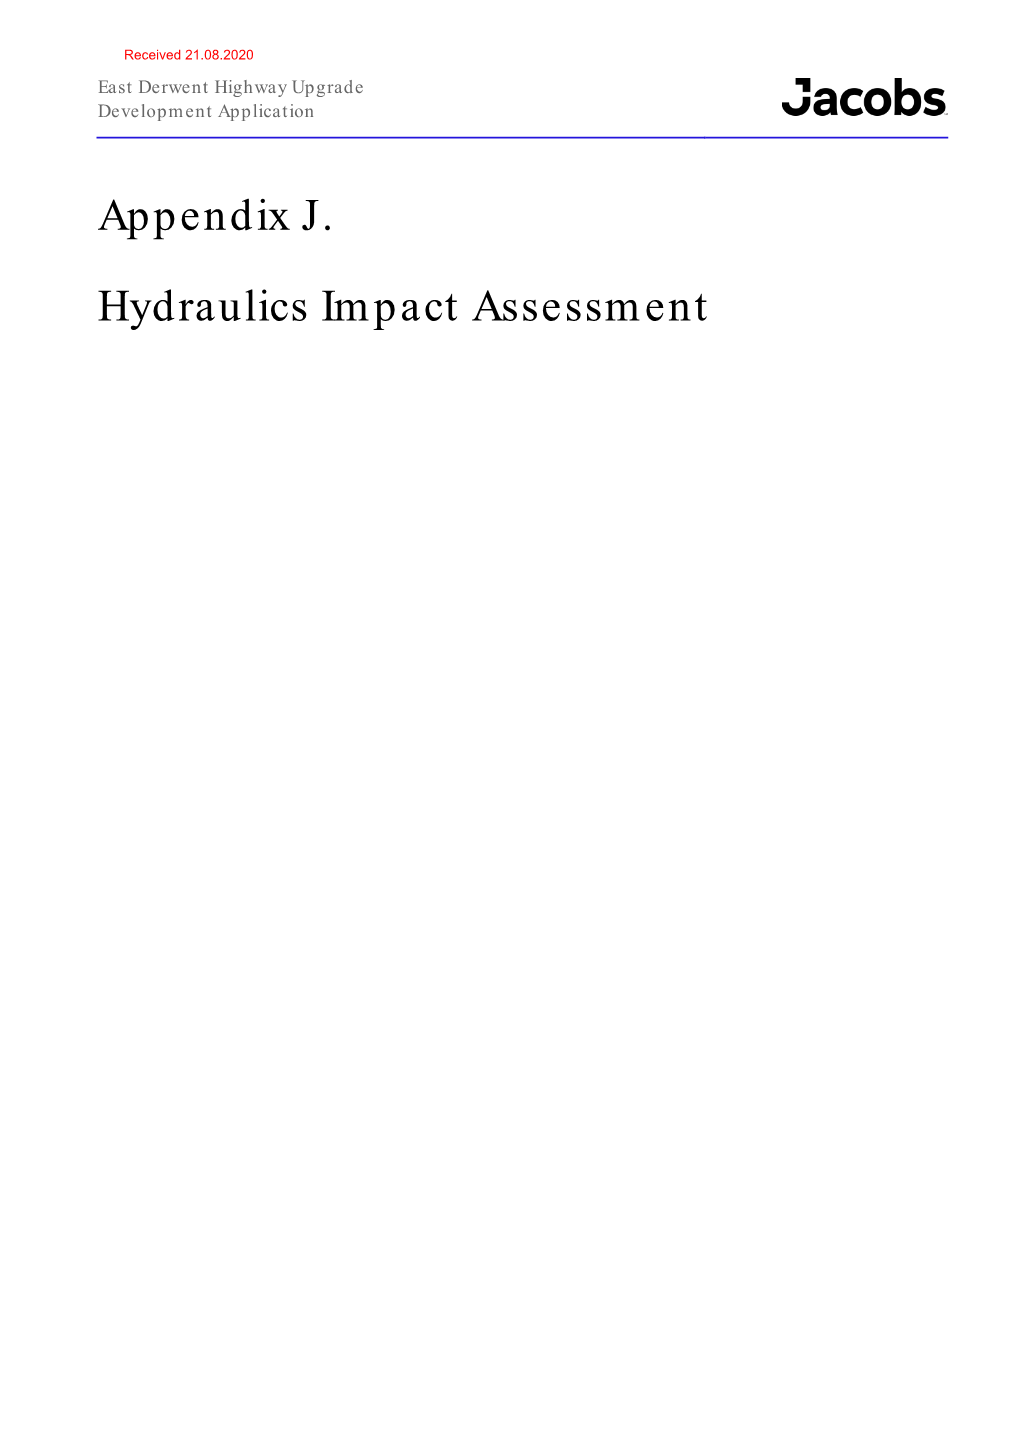 Appendix J. Hydraulics Impact Assessment